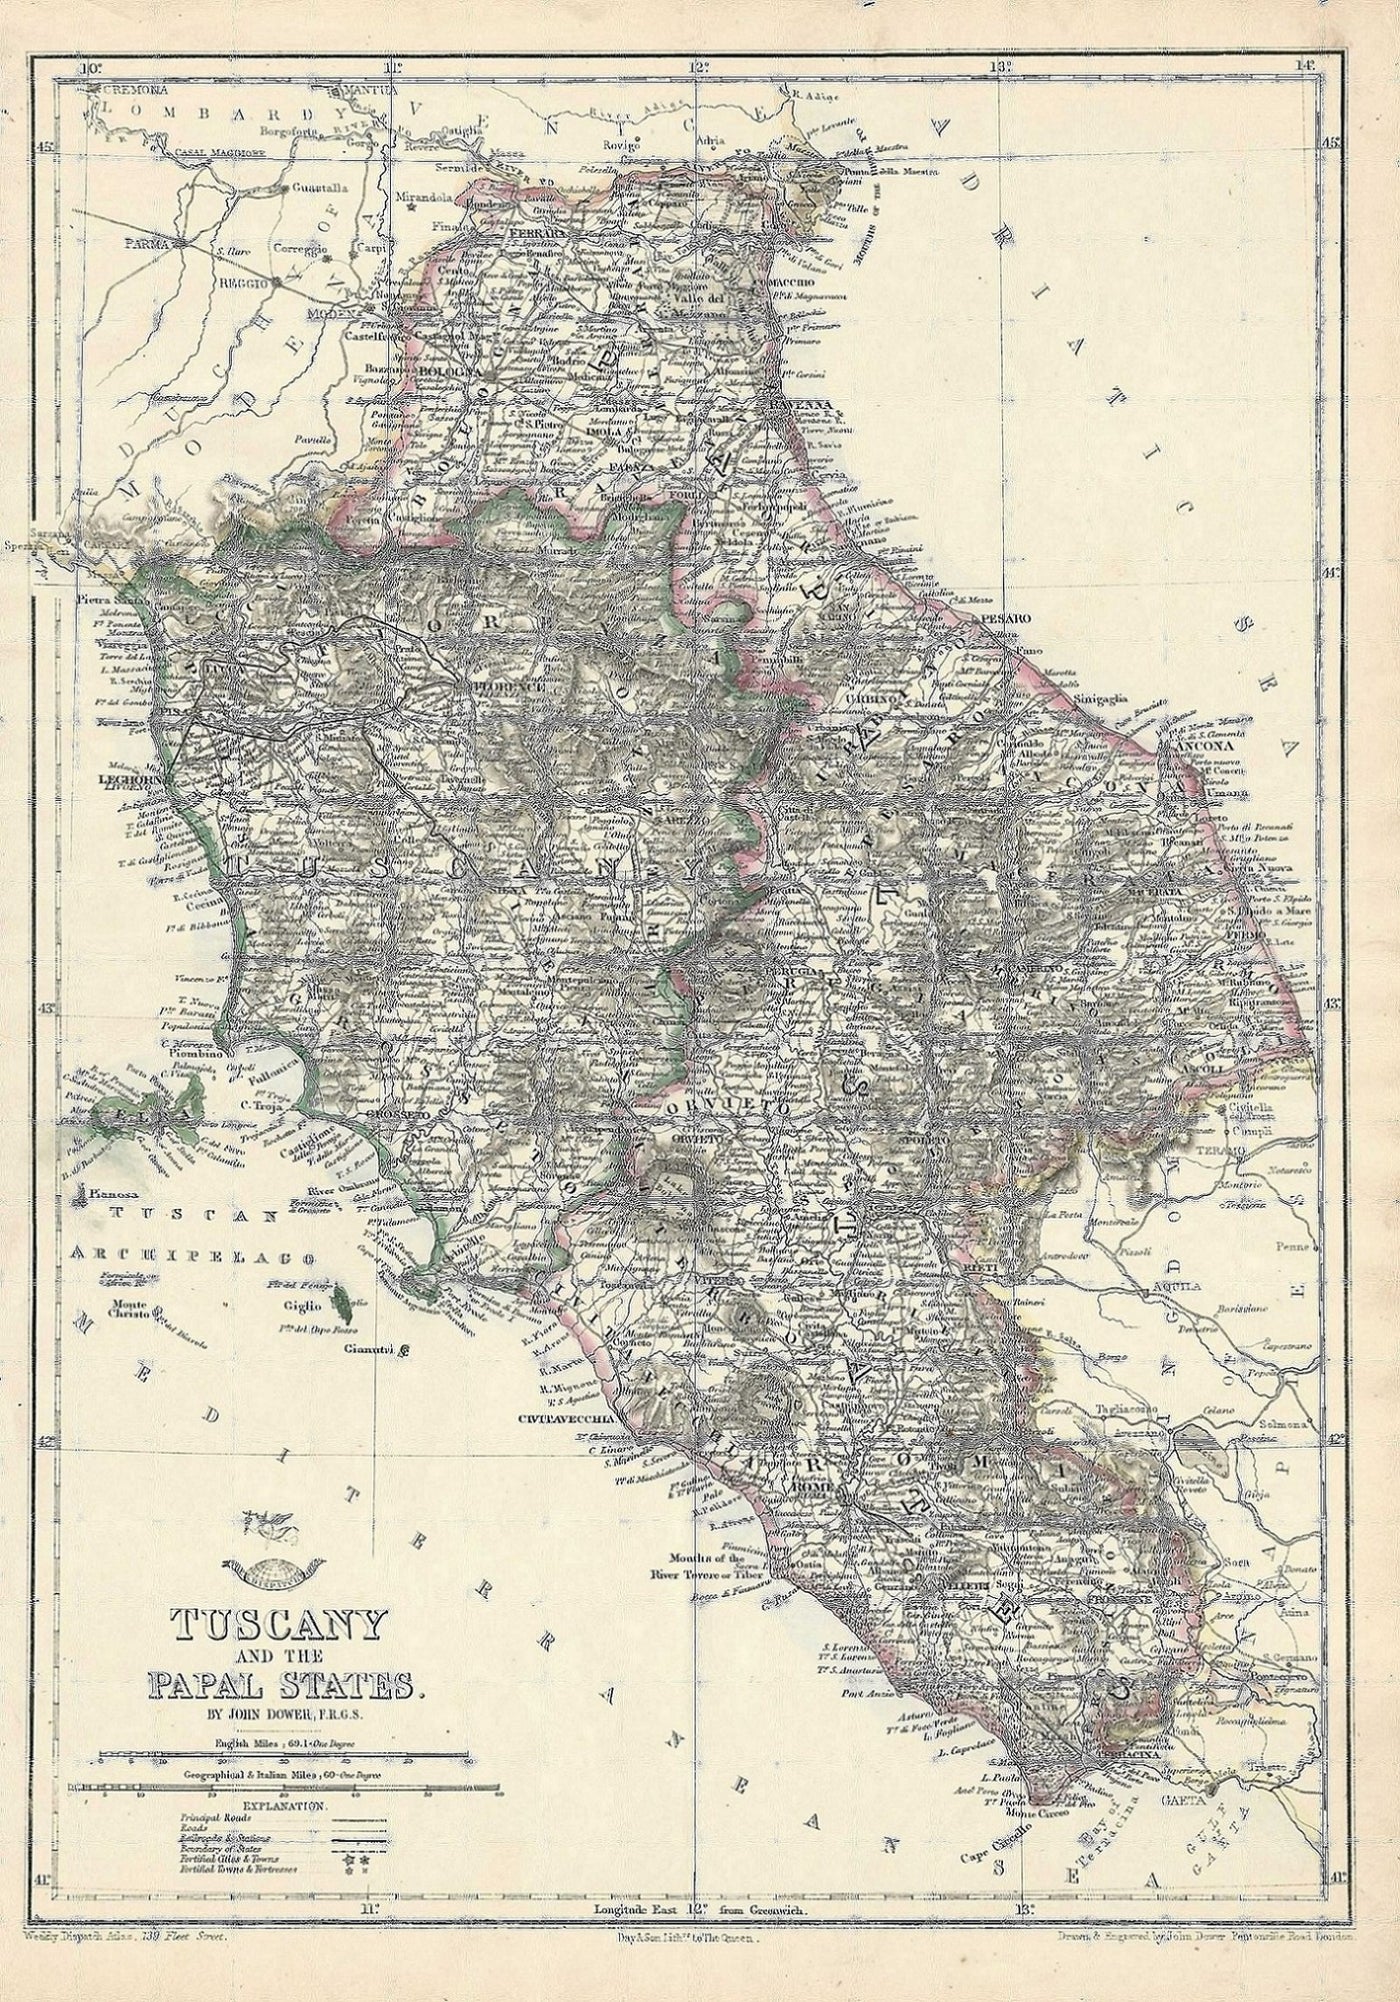 Tuscany antique map Papal States published 1863